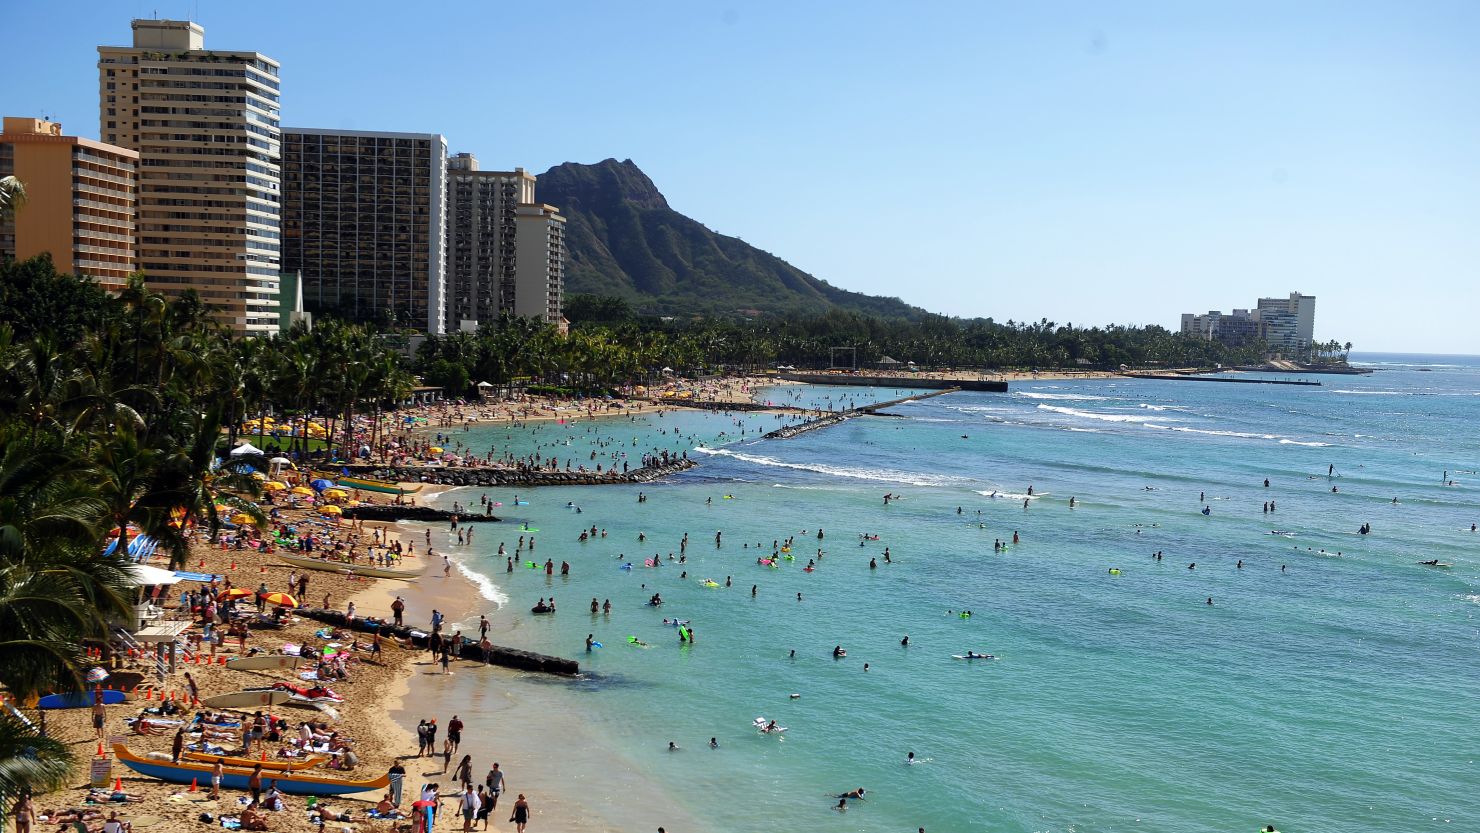 People often flock to visit friends who live in tourist hot spots like Honolulu.